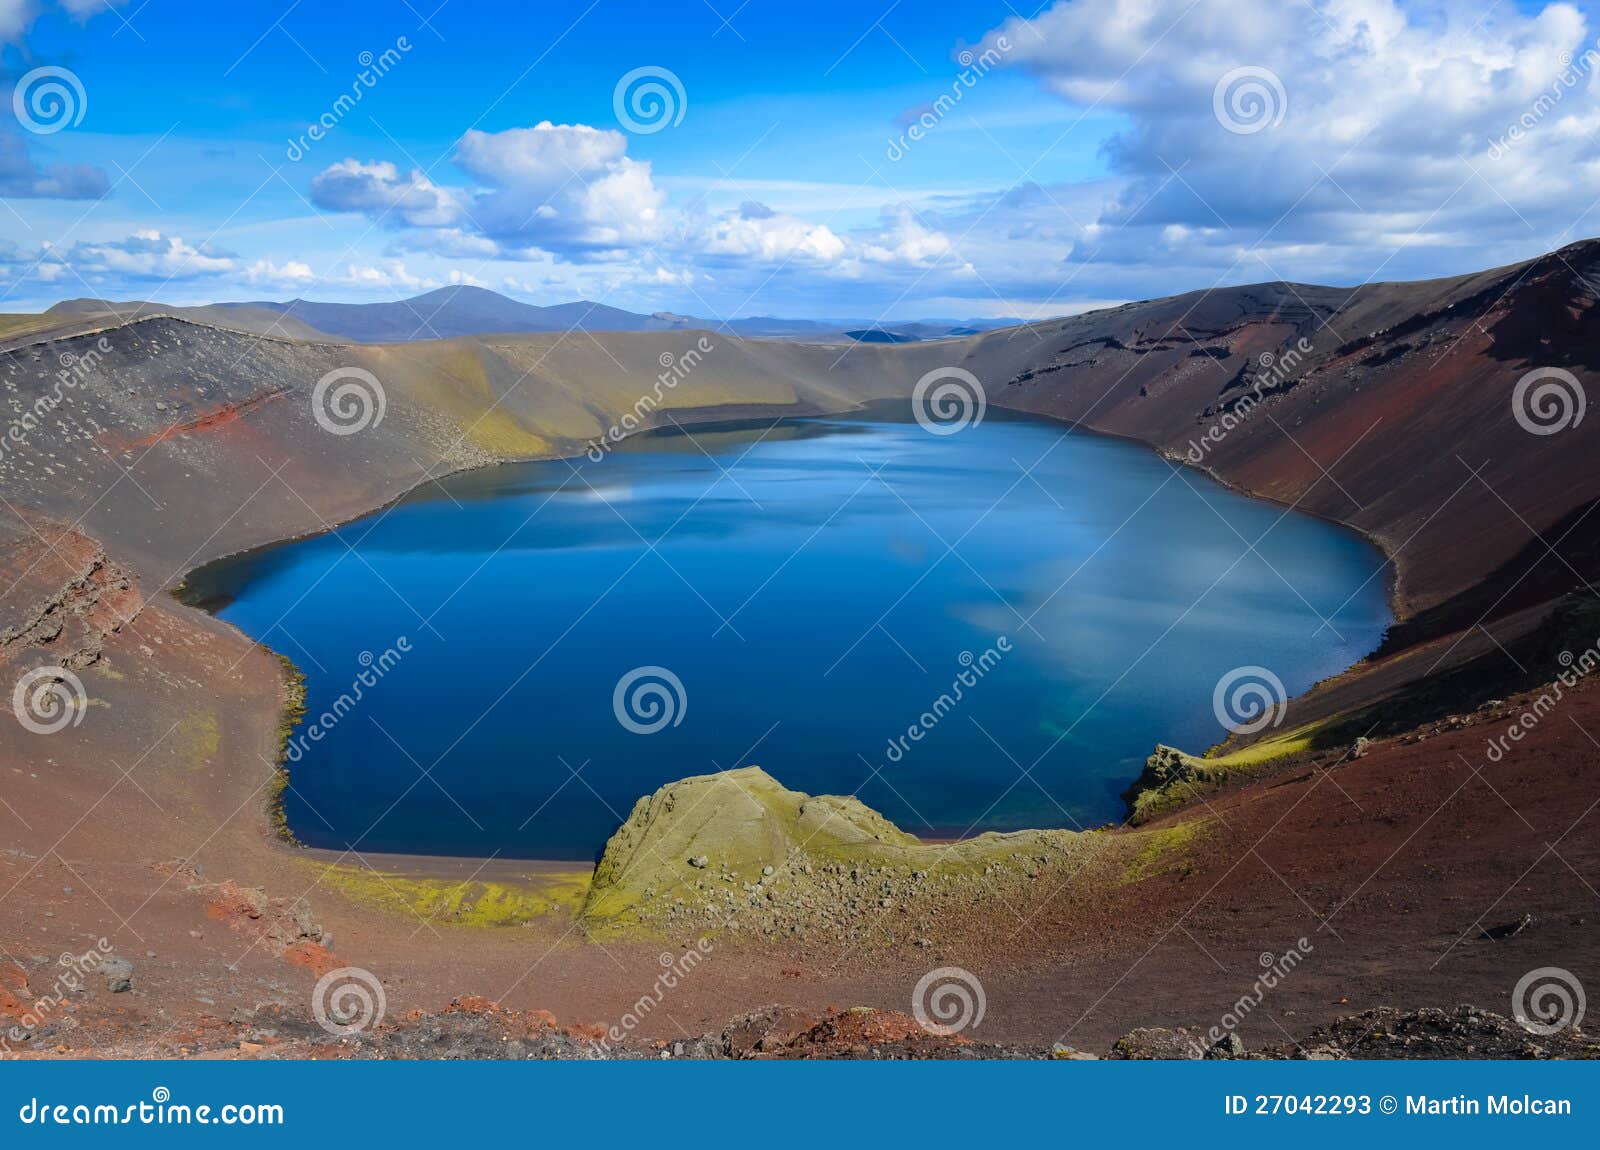 volcano caldera crater lake, iceland